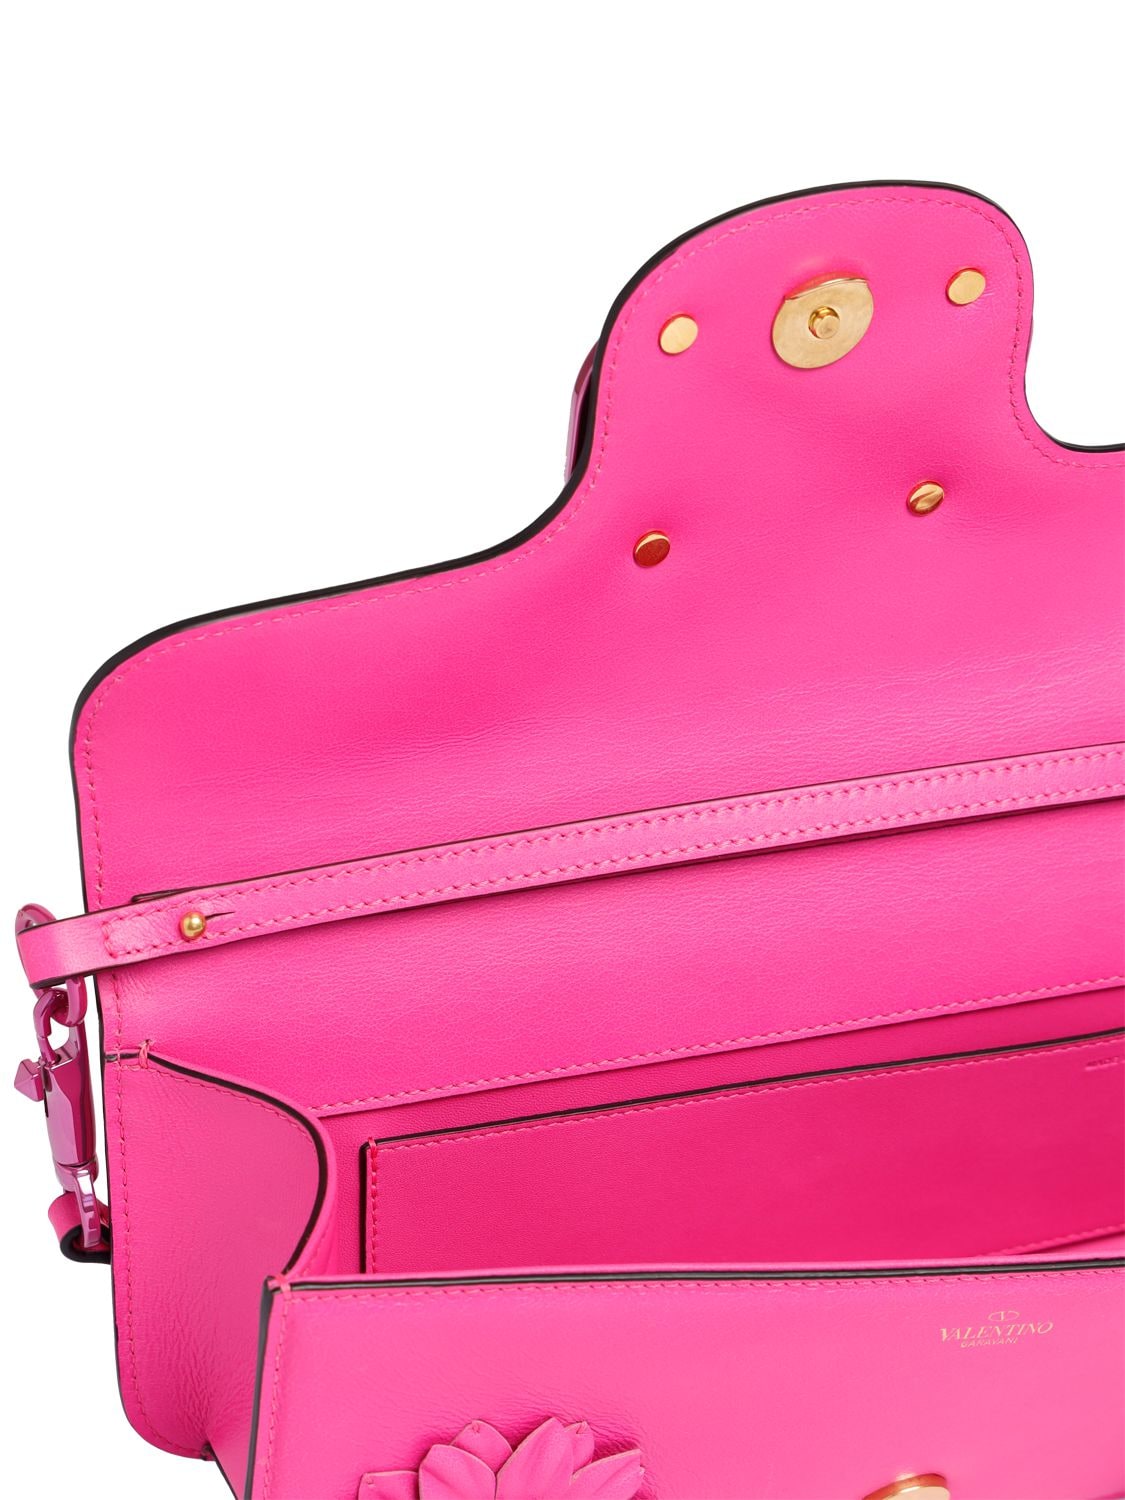 Pink Locò small leather shoulder bag, Valentino Garavani